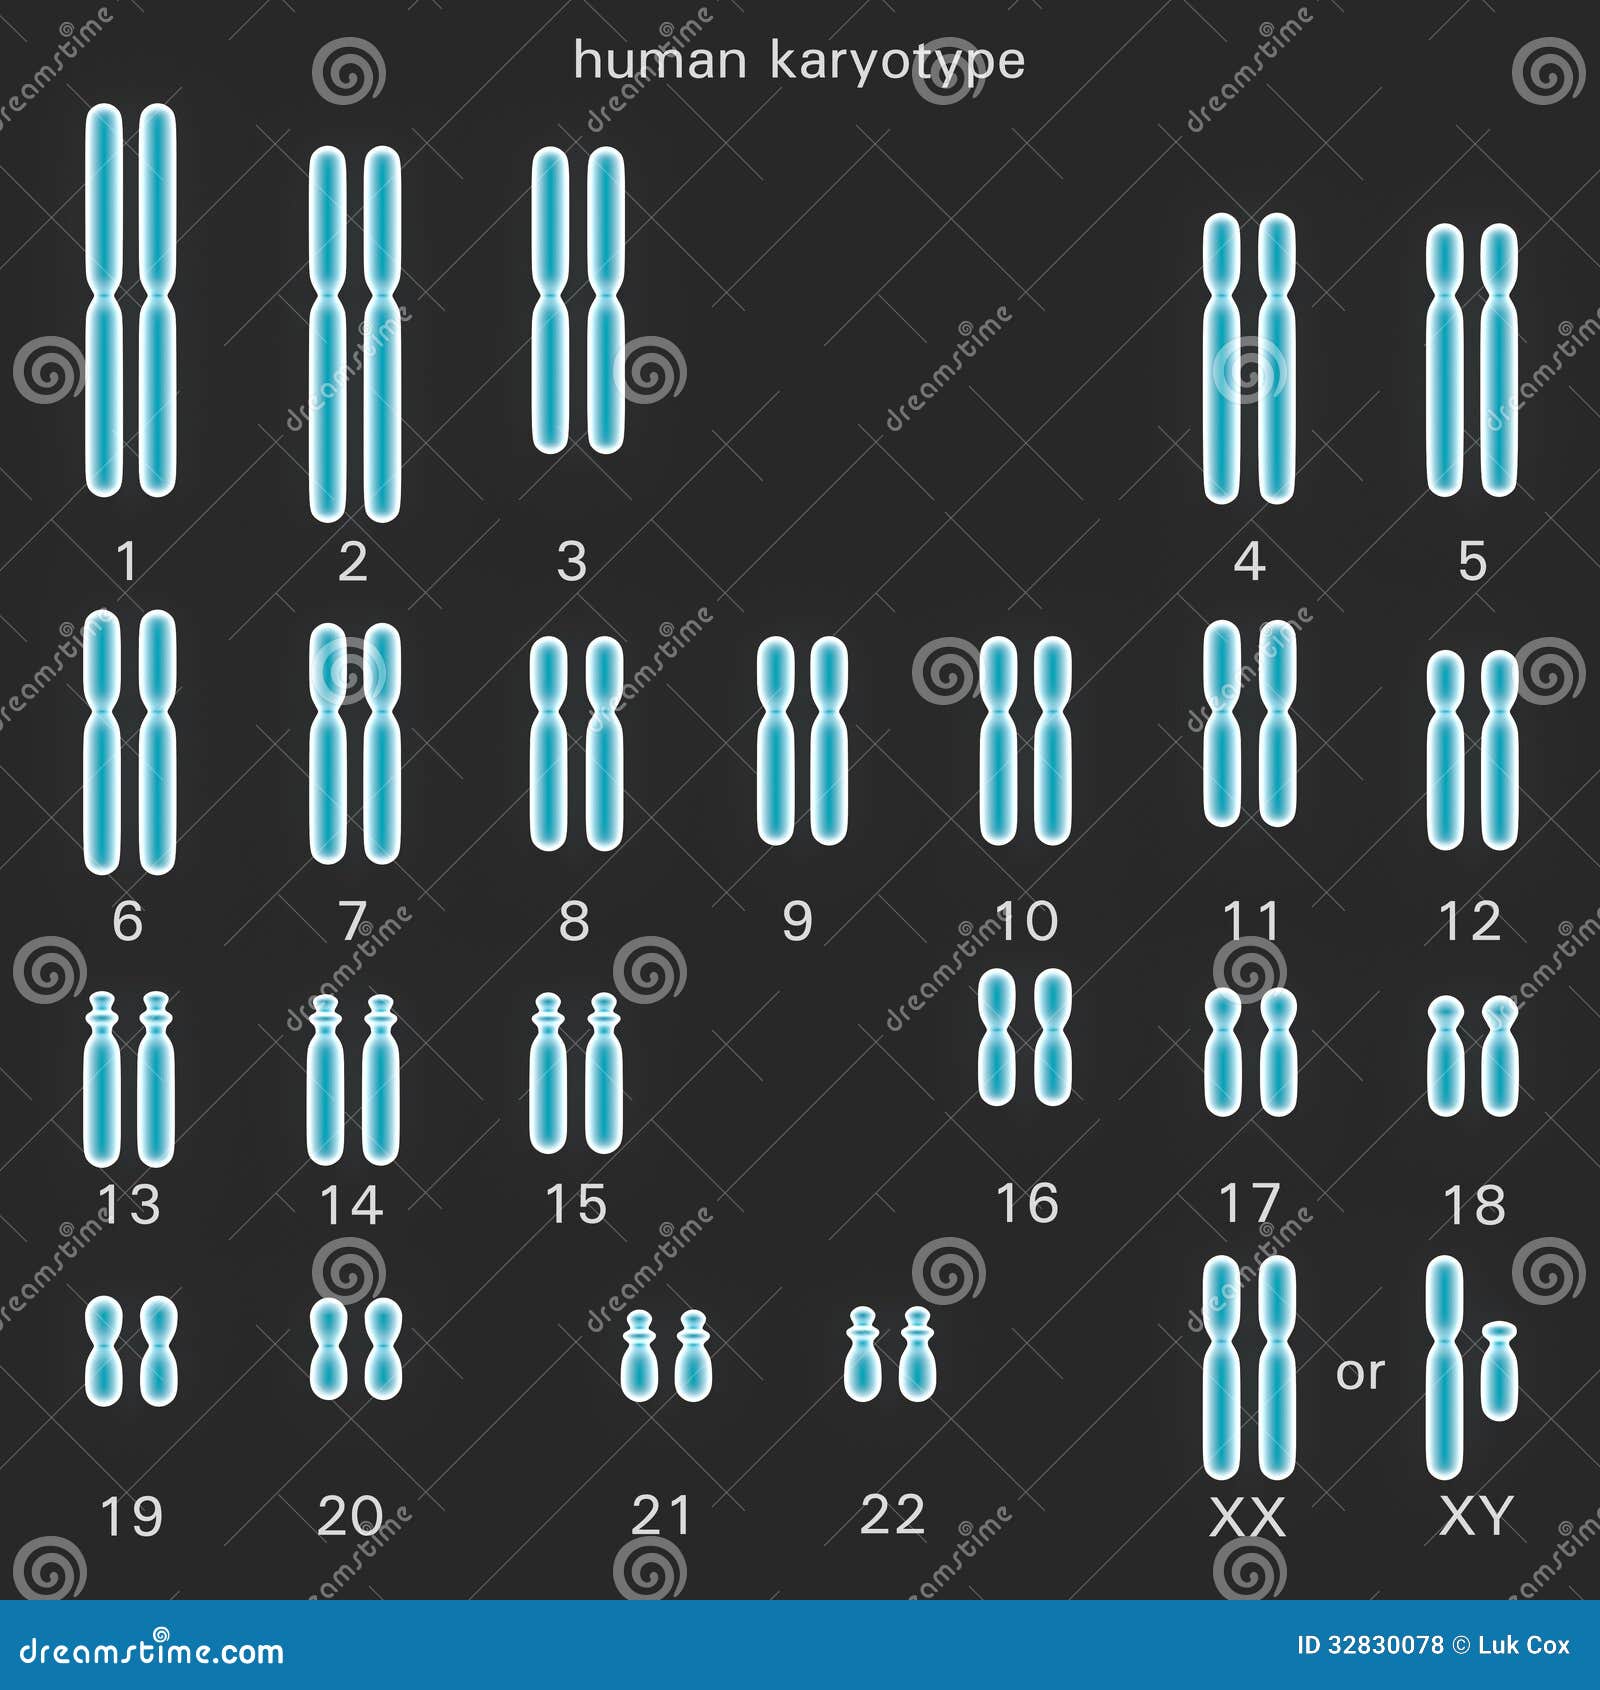 normal human karyotype